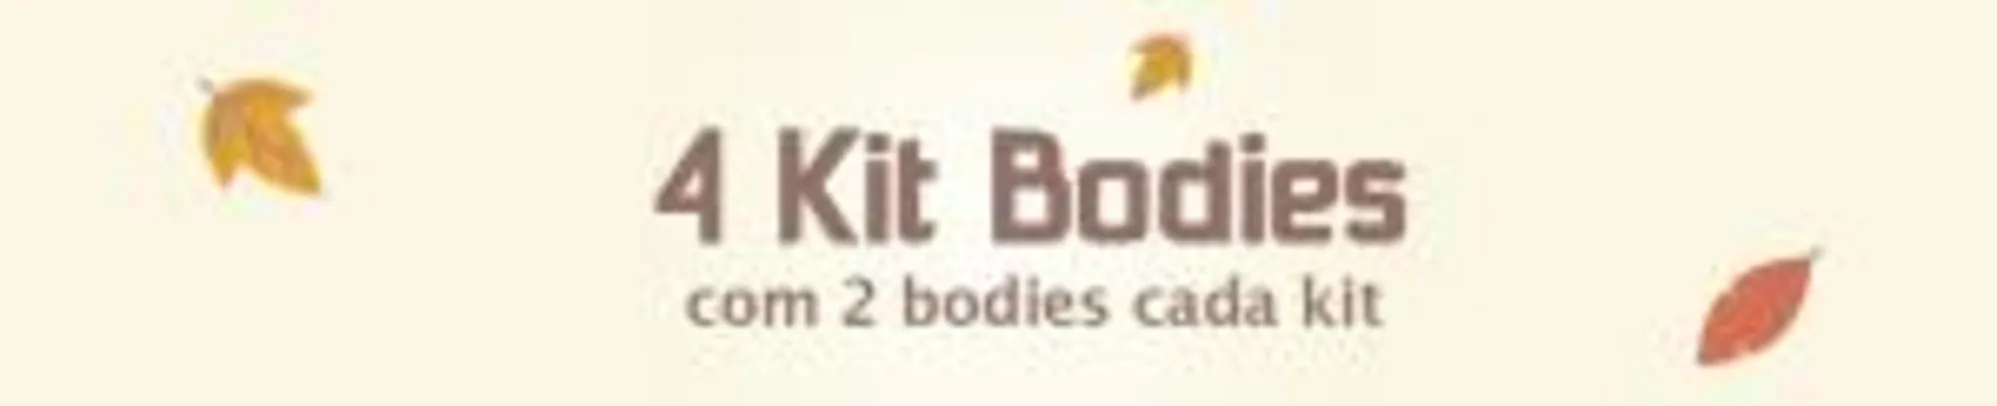 4 Kit Body Infantil por R$69,90